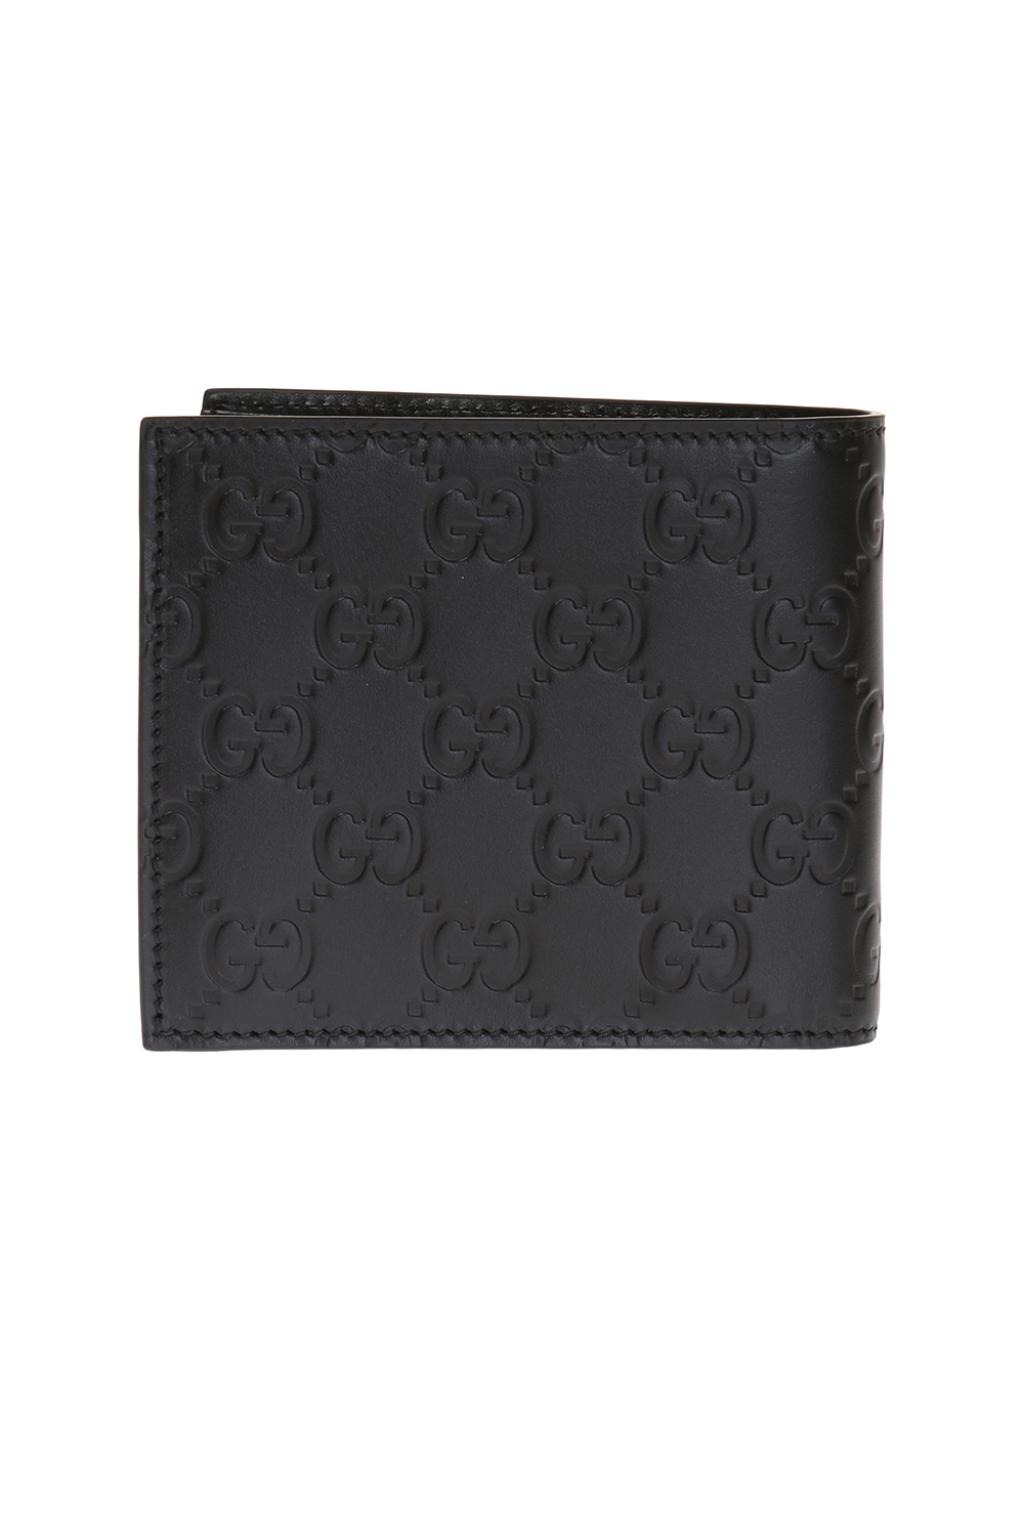 Gucci Leather bi-fold wallet